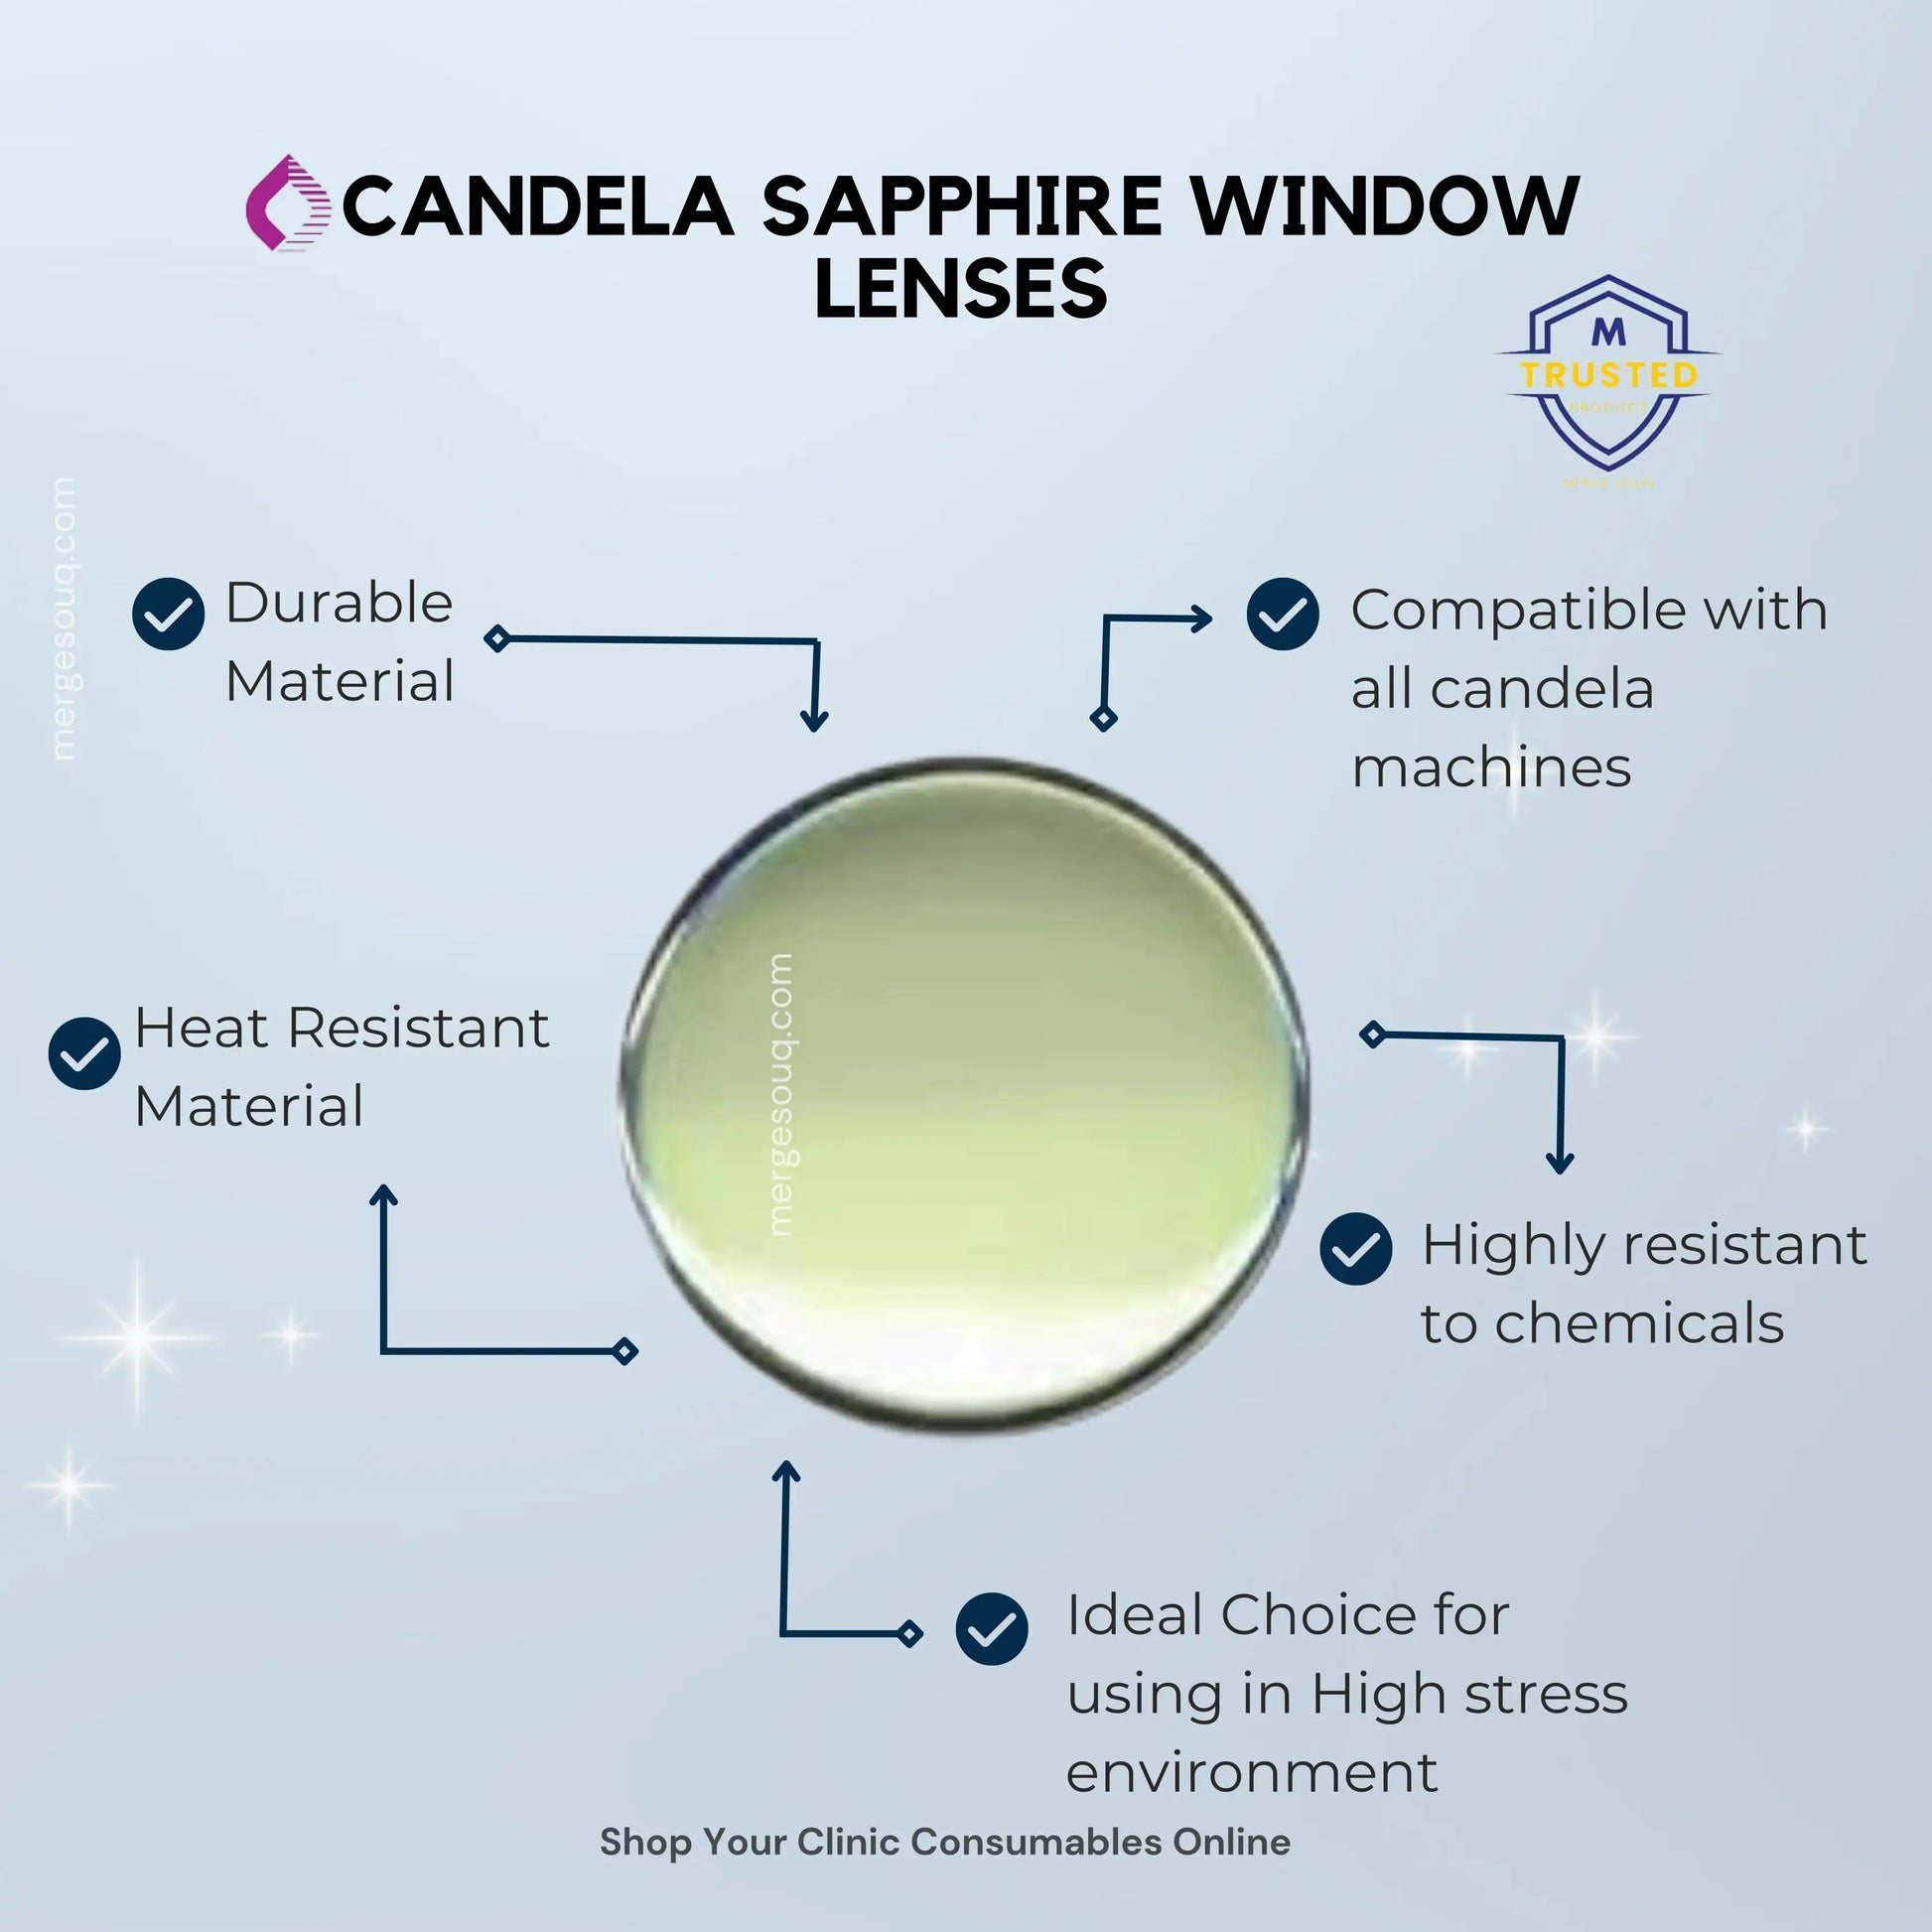 Candela Sapphire Window Lenses| Candela Slider Lens| Premium Windows| Suitable for all Candela Laser Machines